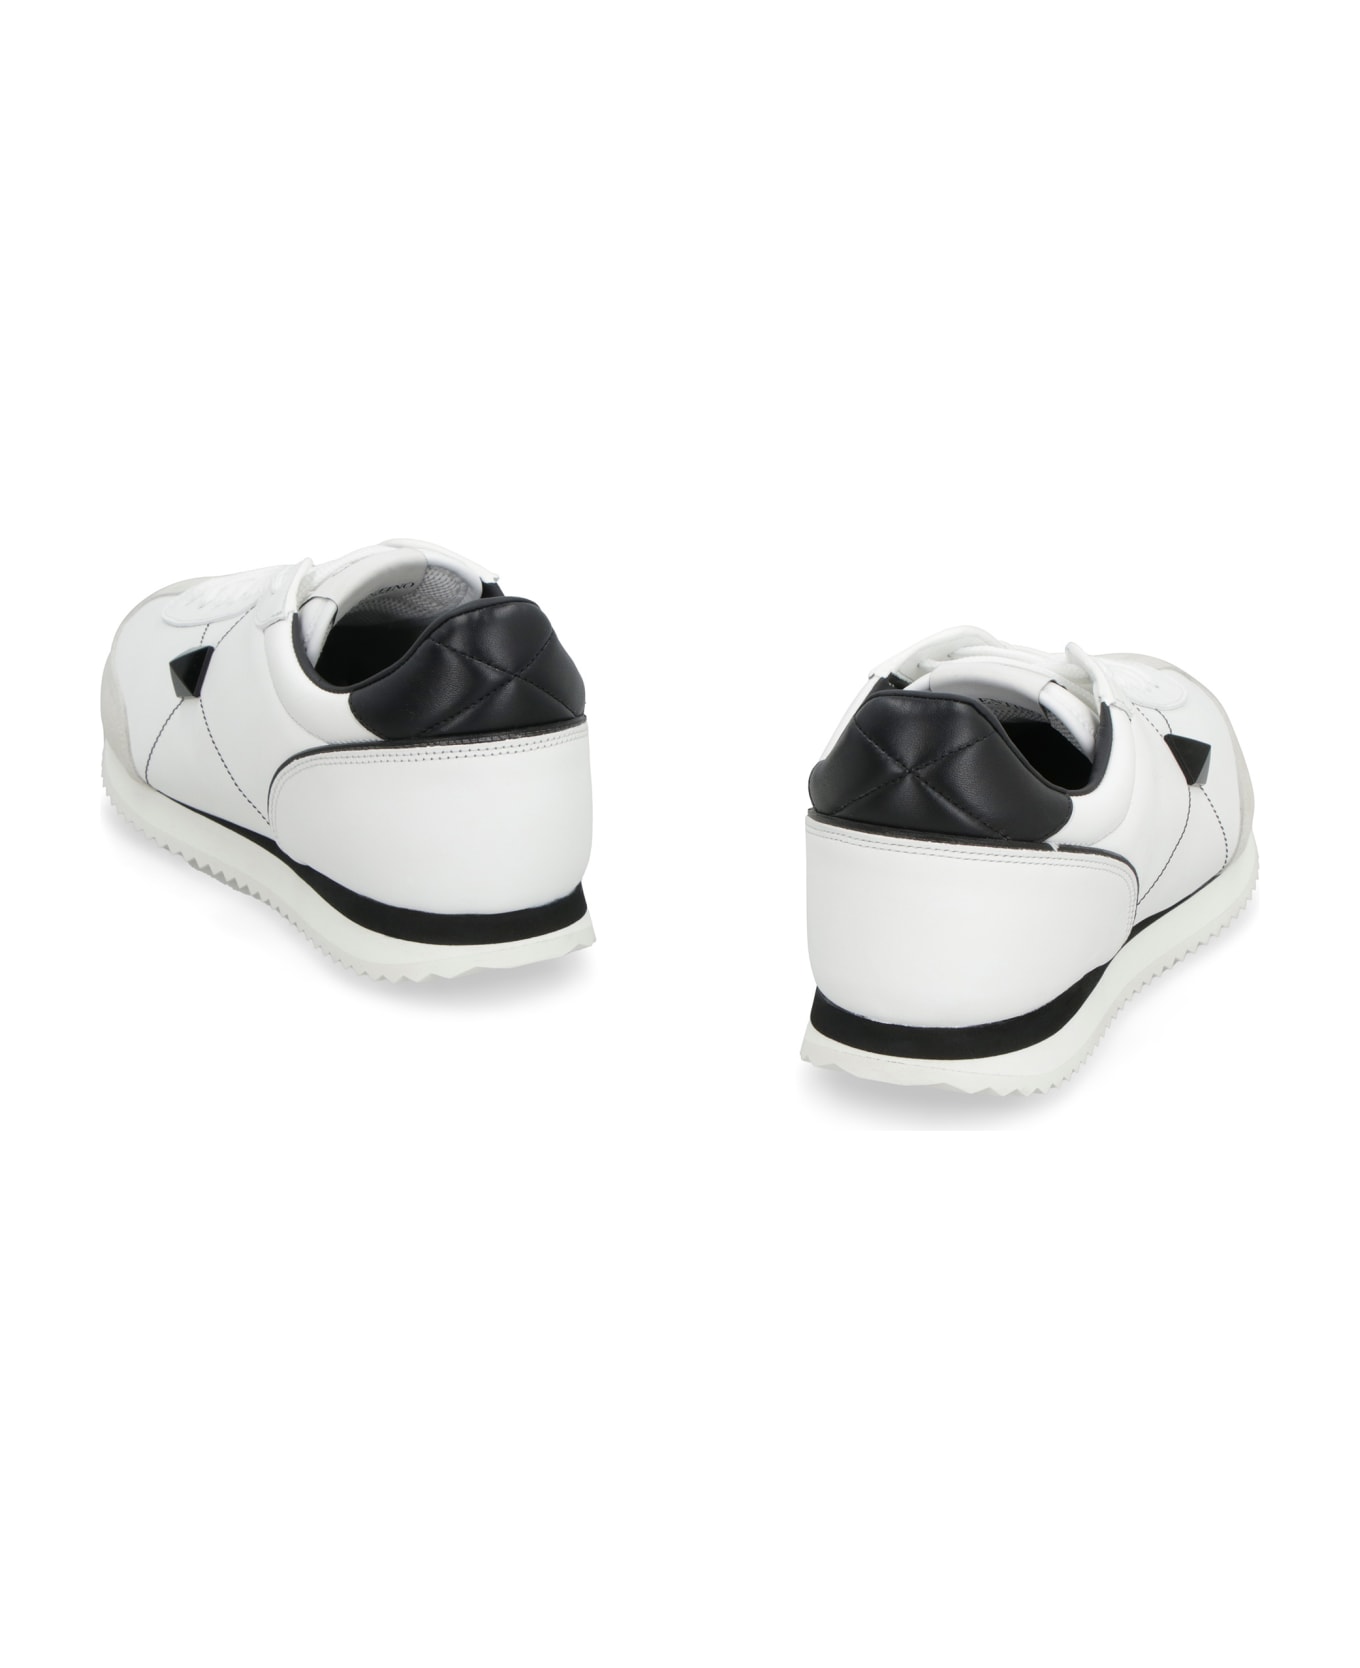 Valentino Garavani White Low Top Sneakers In Calf Leather And Nappa Leather - White